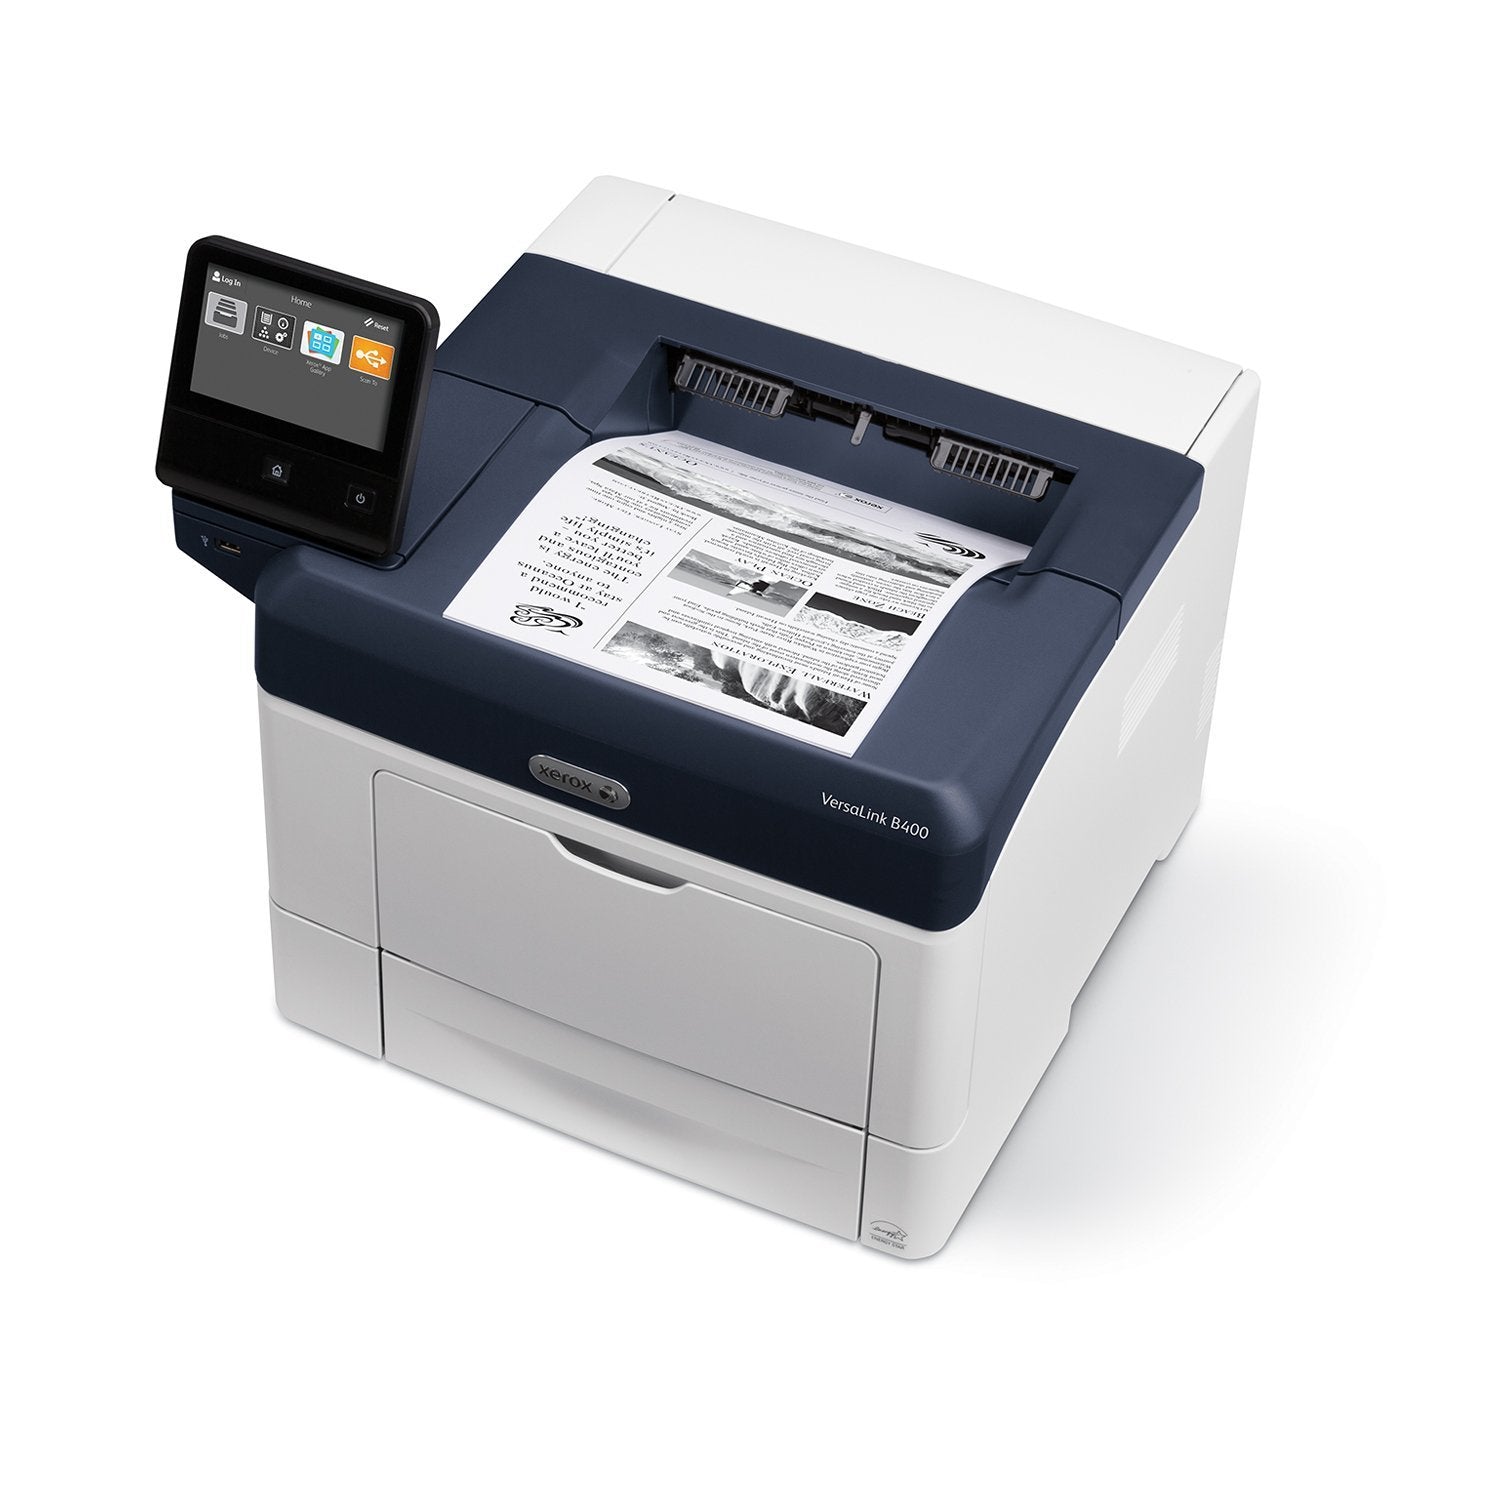 Xerox VersaLink B400 Black and White 47 ppm Laser Printer 5" / 12.7 cm LCD